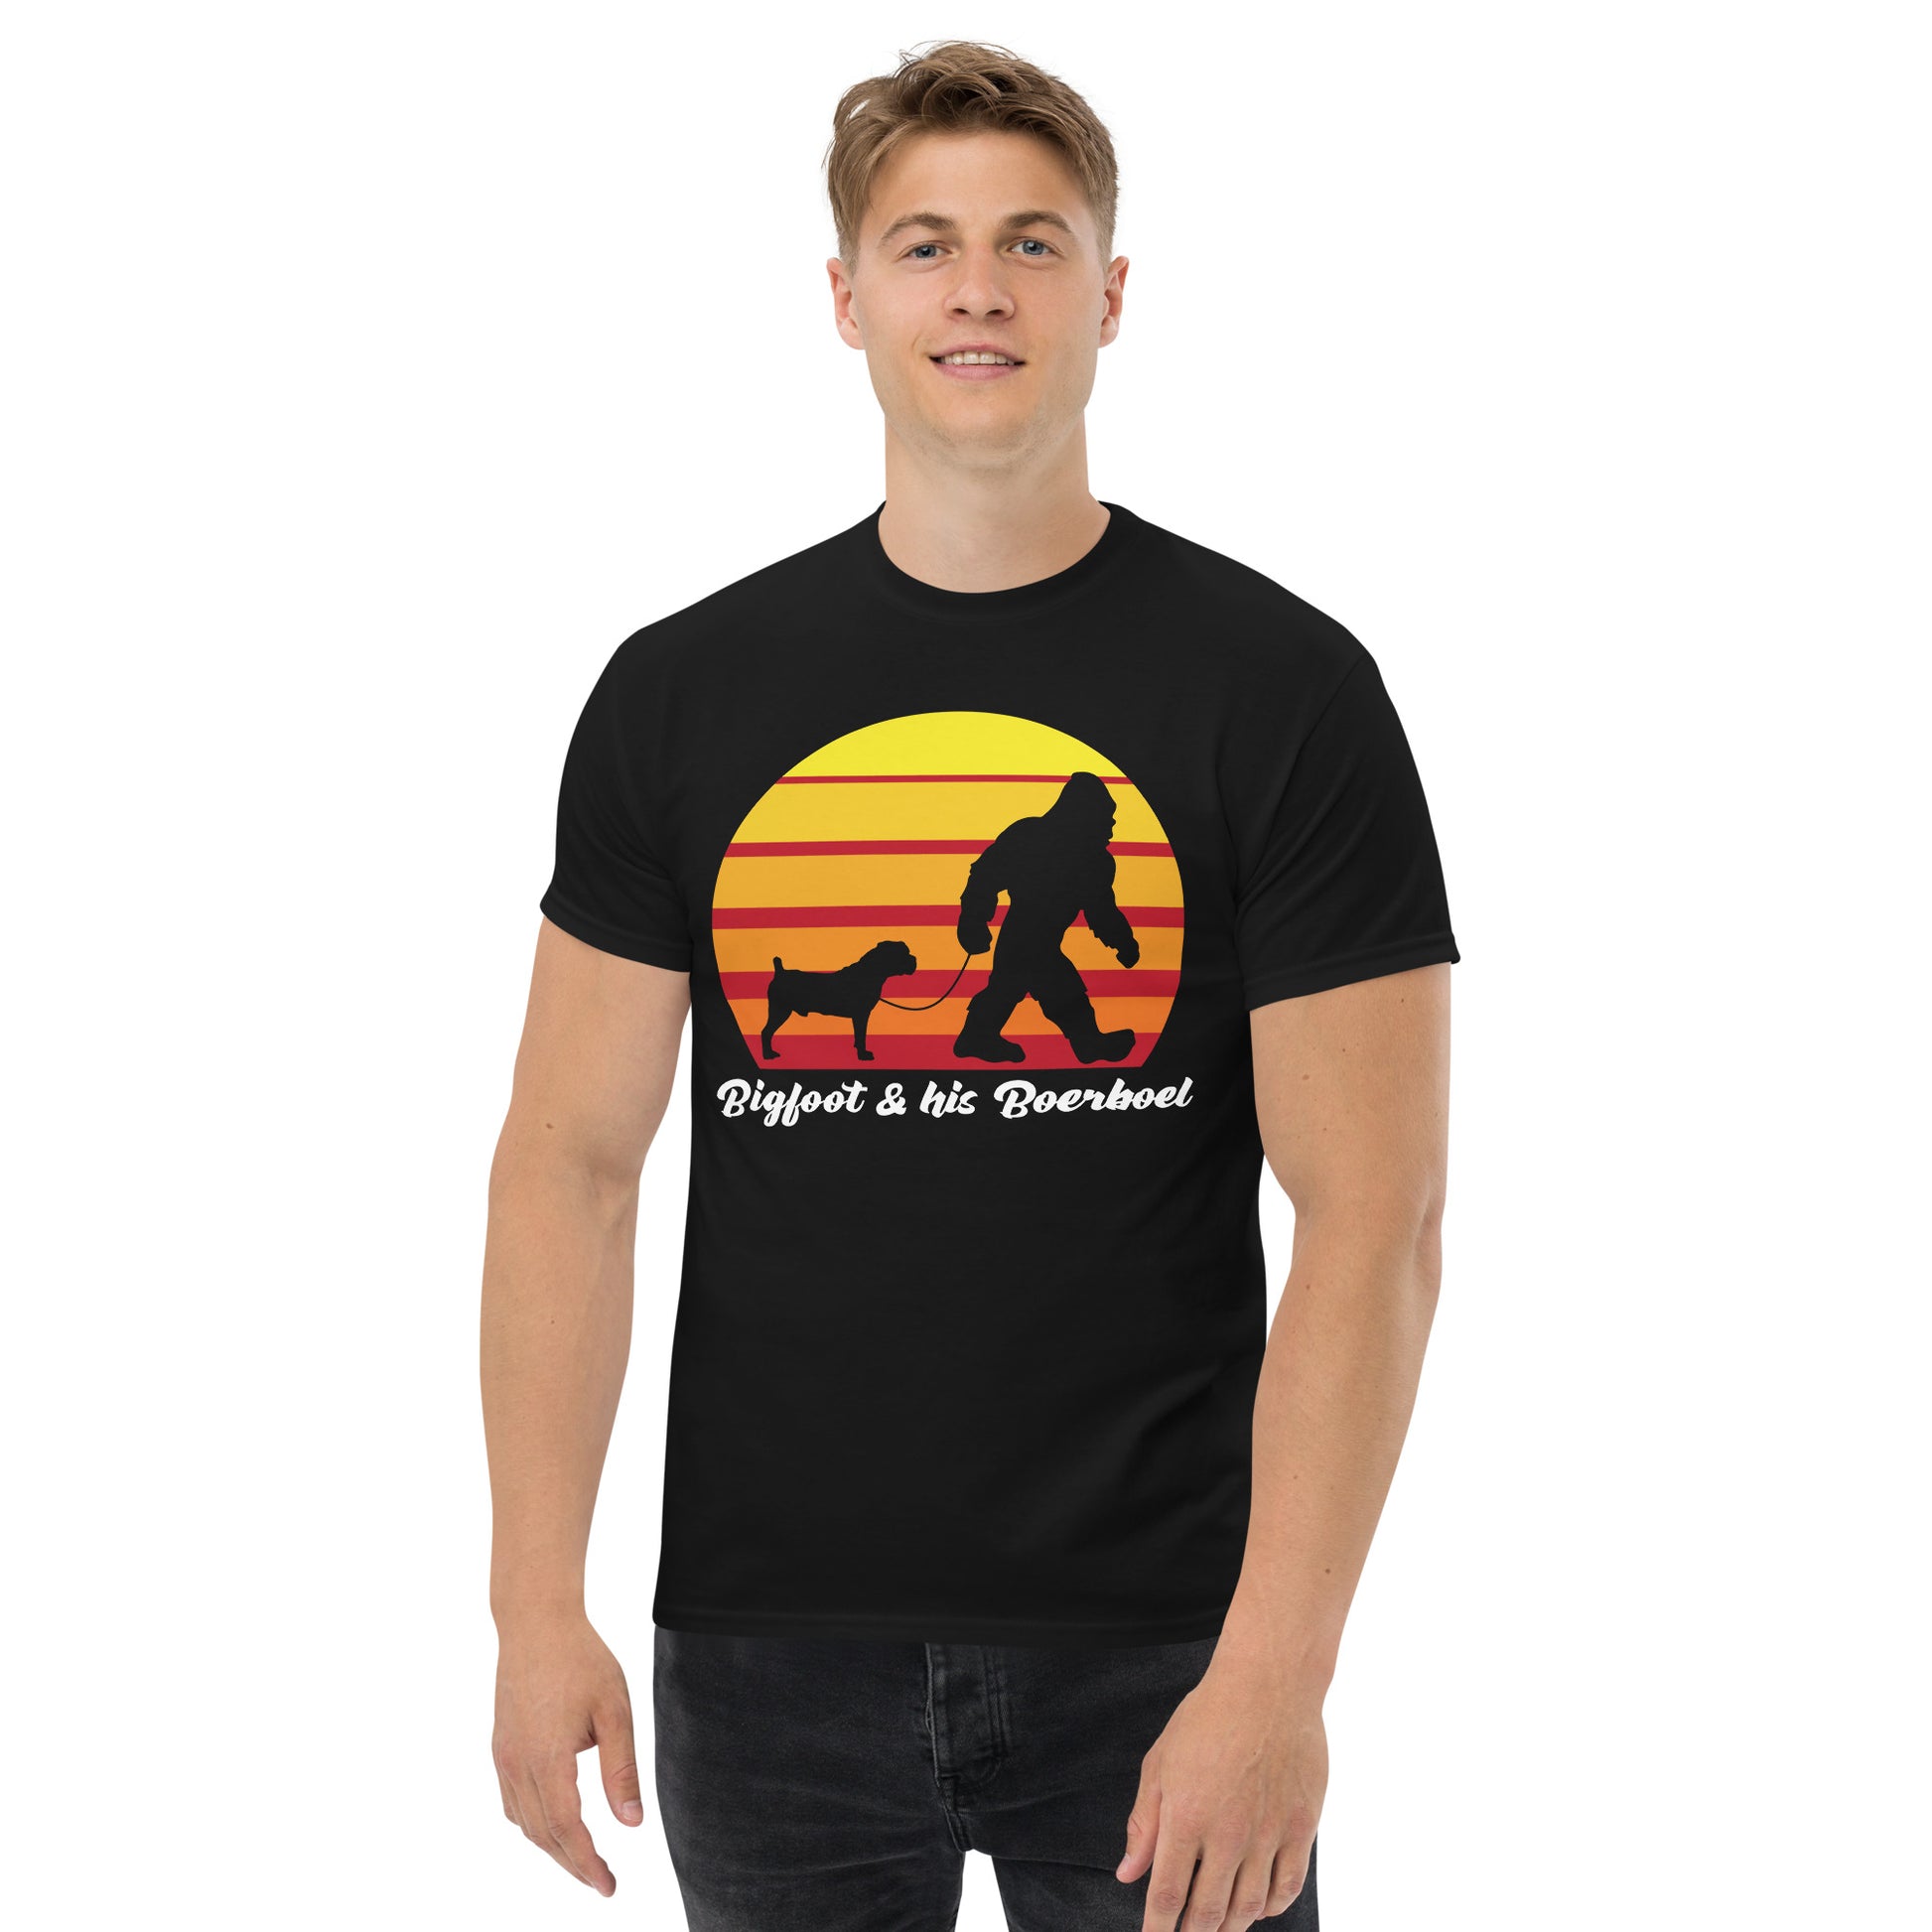 Big foot and his Boerboel men’s black t-shirt by Dog Artistry.